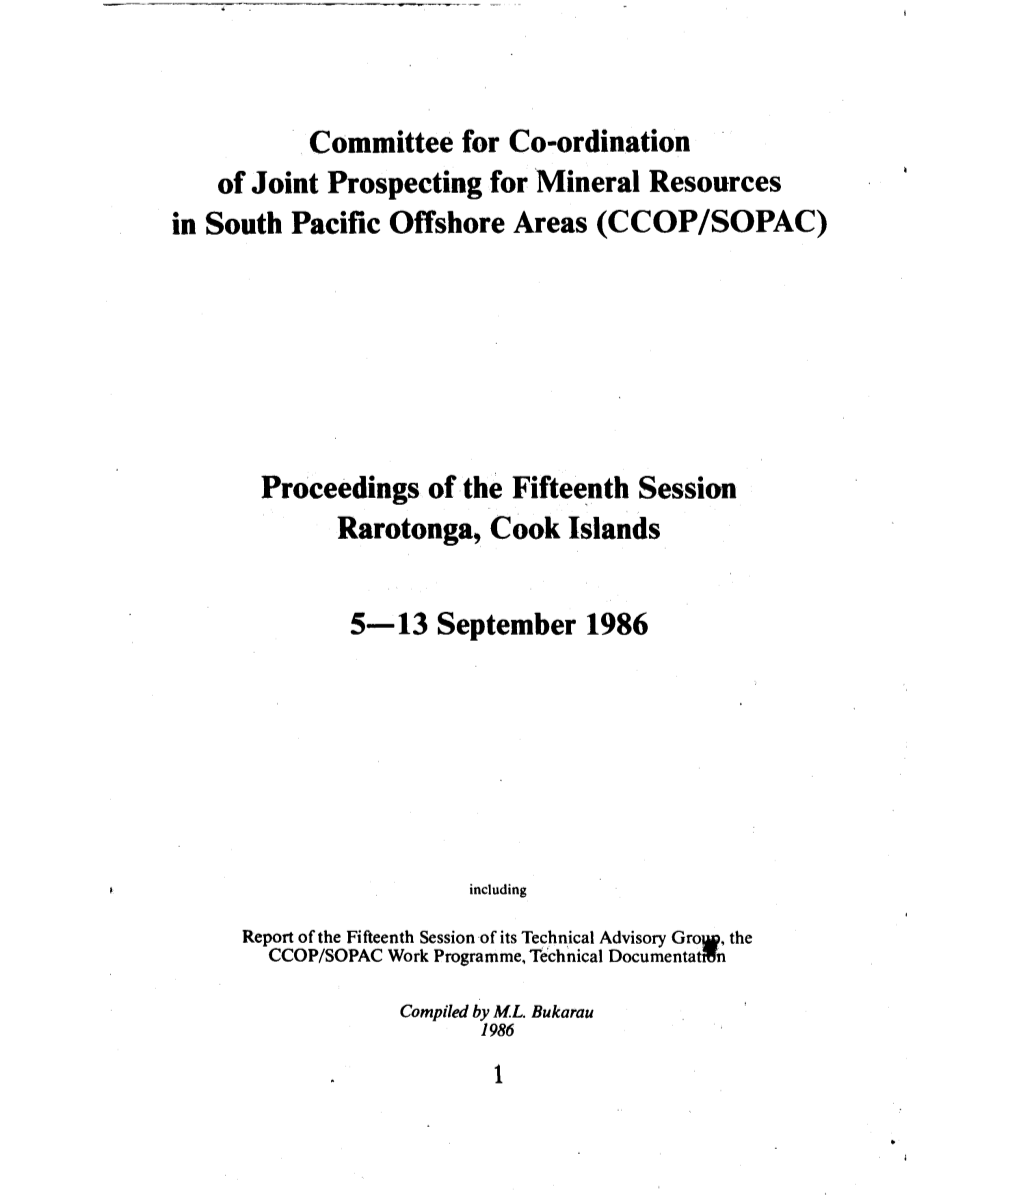 Proceedings of the Fifteenth Session, Rarotonga, Cook Islands, 5-13